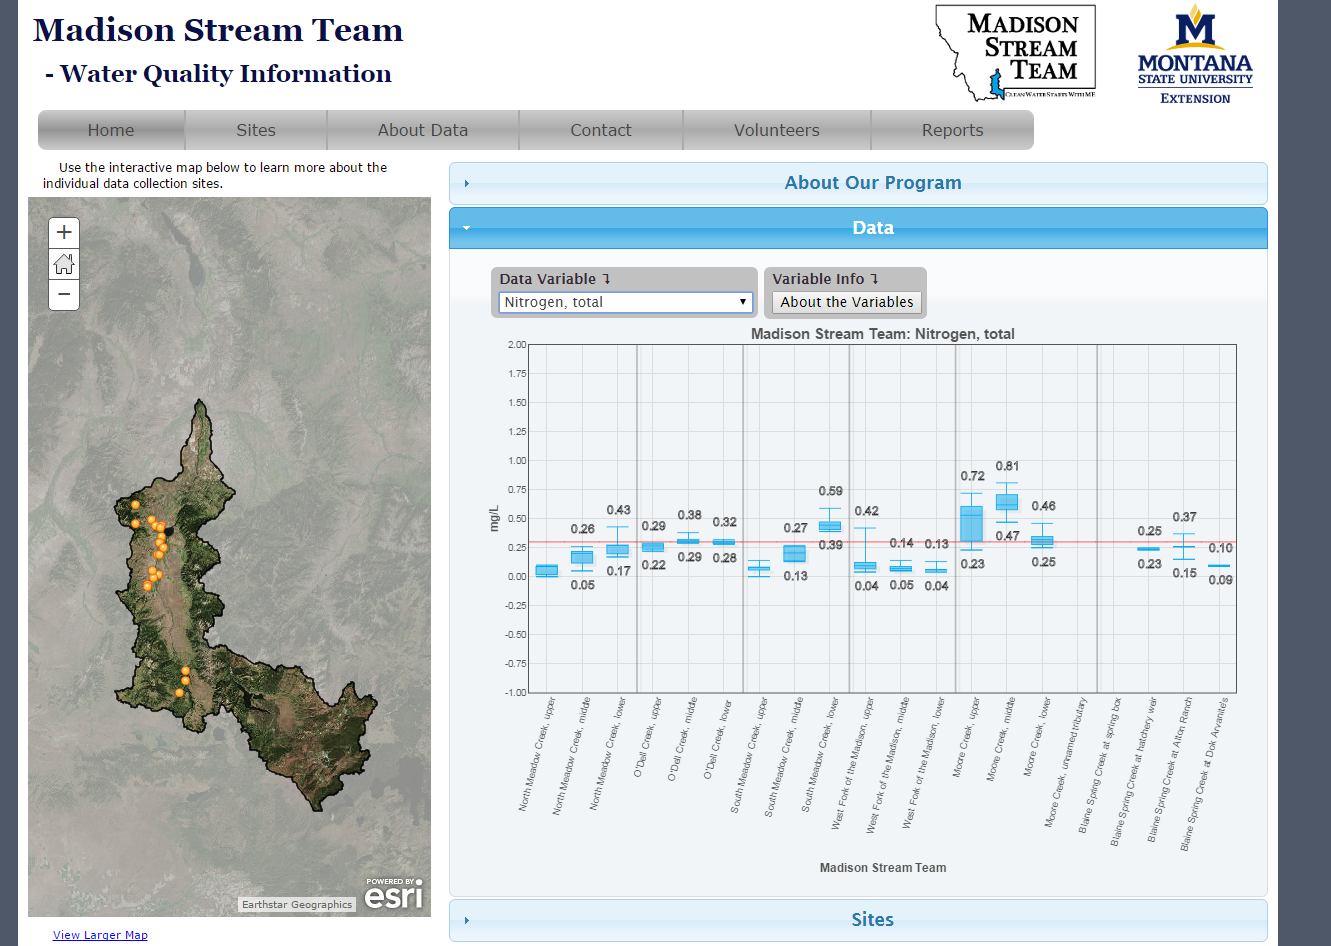 Madison River Stream Team Data